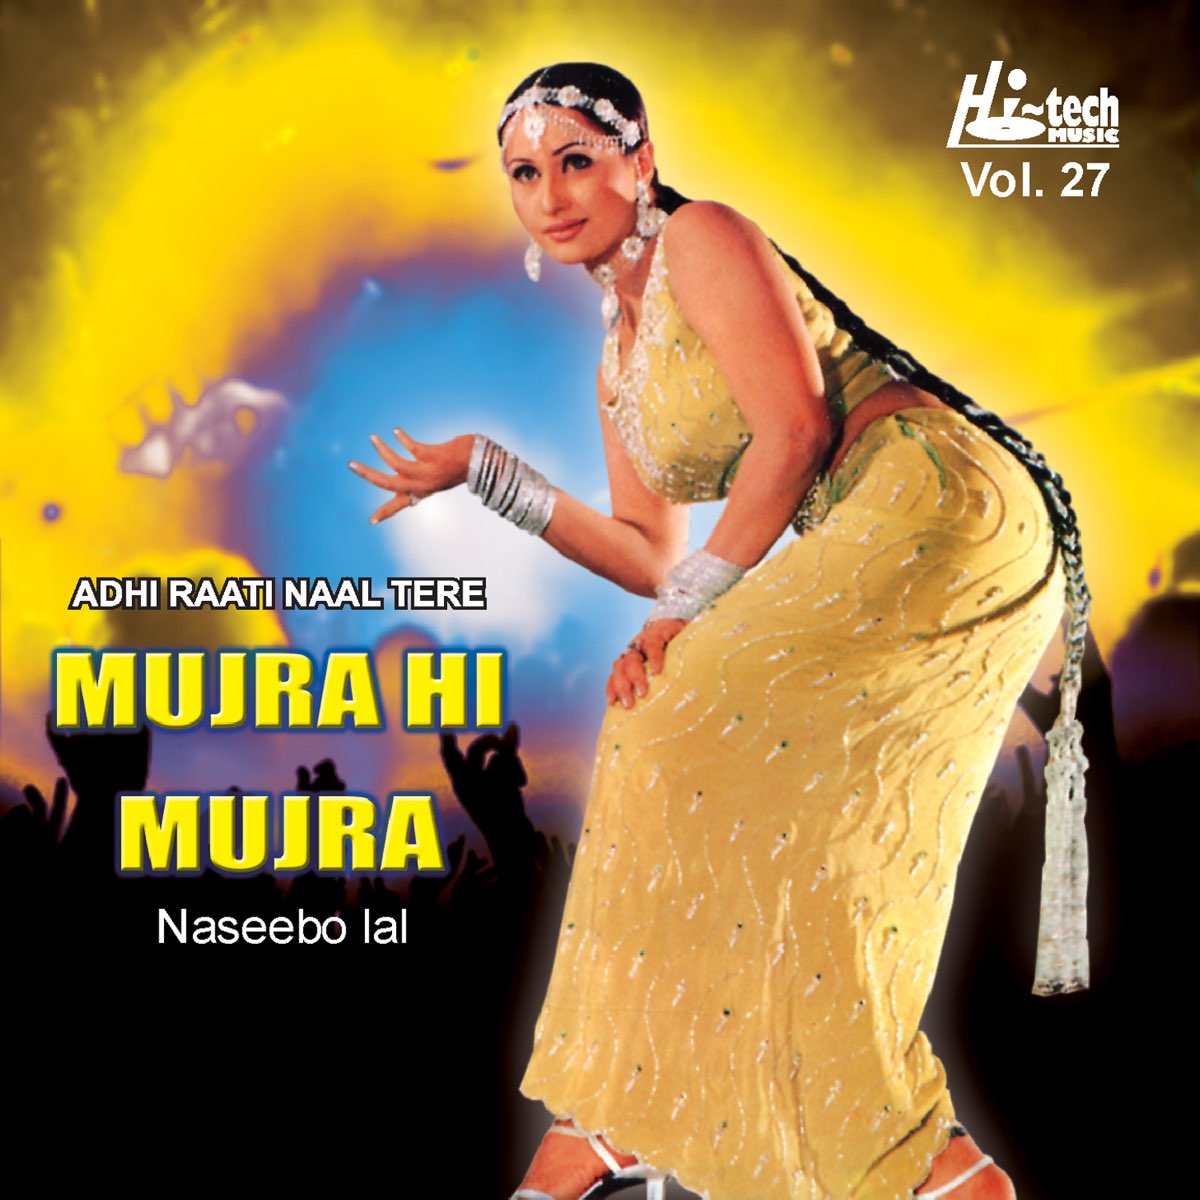 Mujra Hi Mujra Vol. 27 - Album by Naseebo Lal - Apple Music